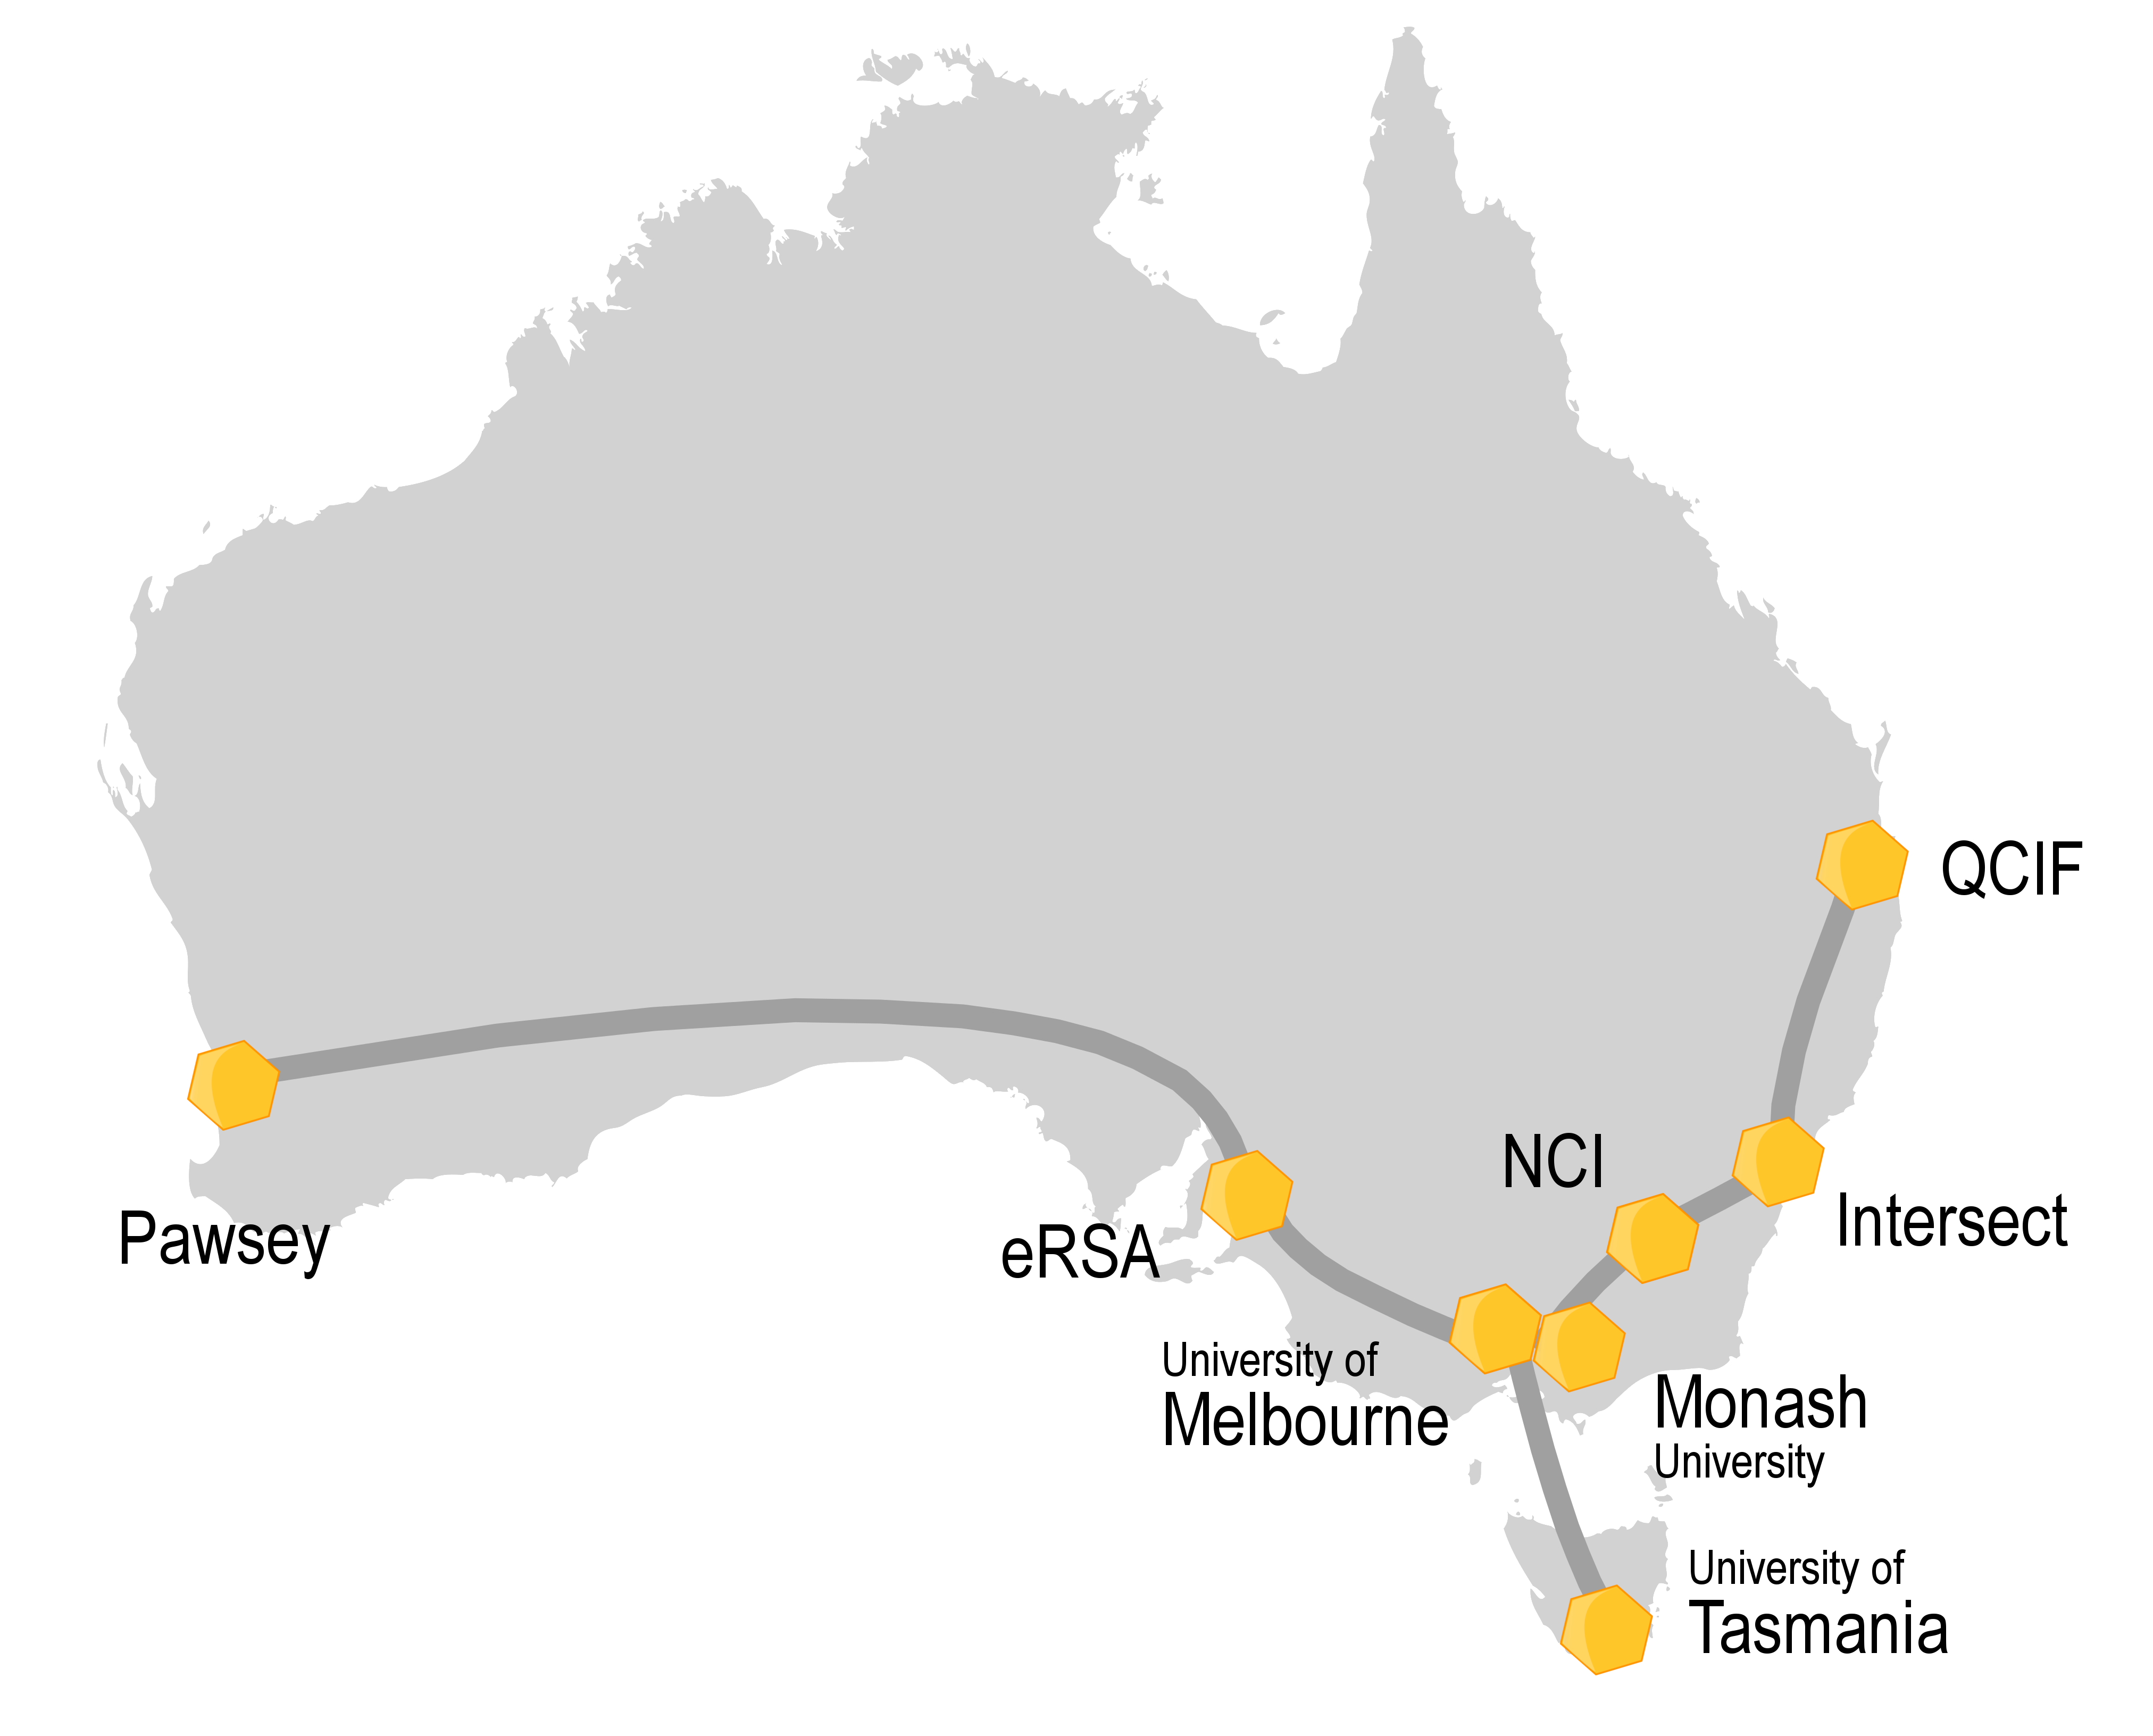 NeCTAR federation across Australia